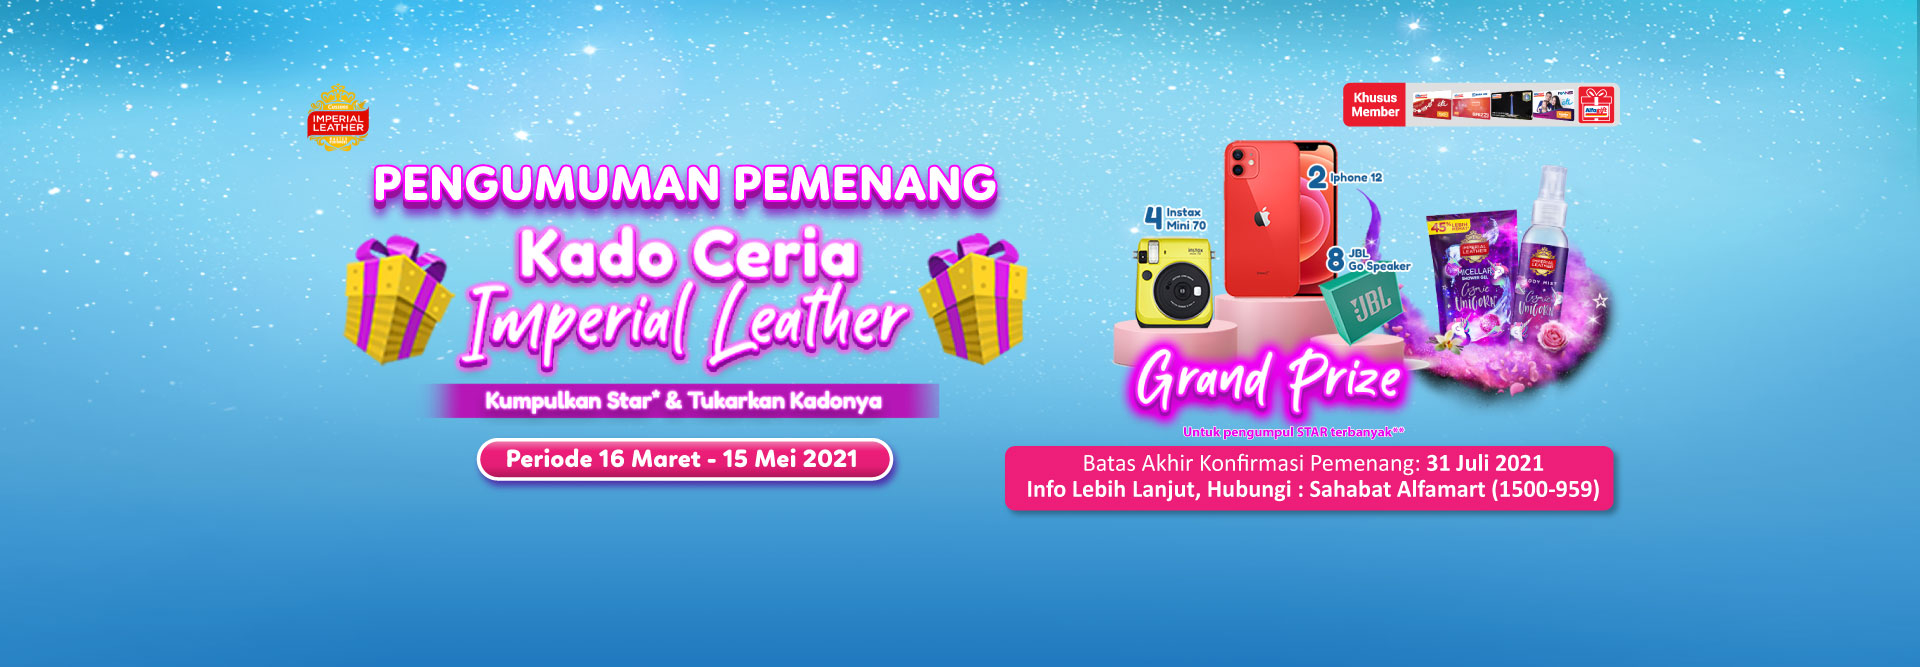 Banner Program Alfastar - Kado Ceria Imperial Leather Alfamart